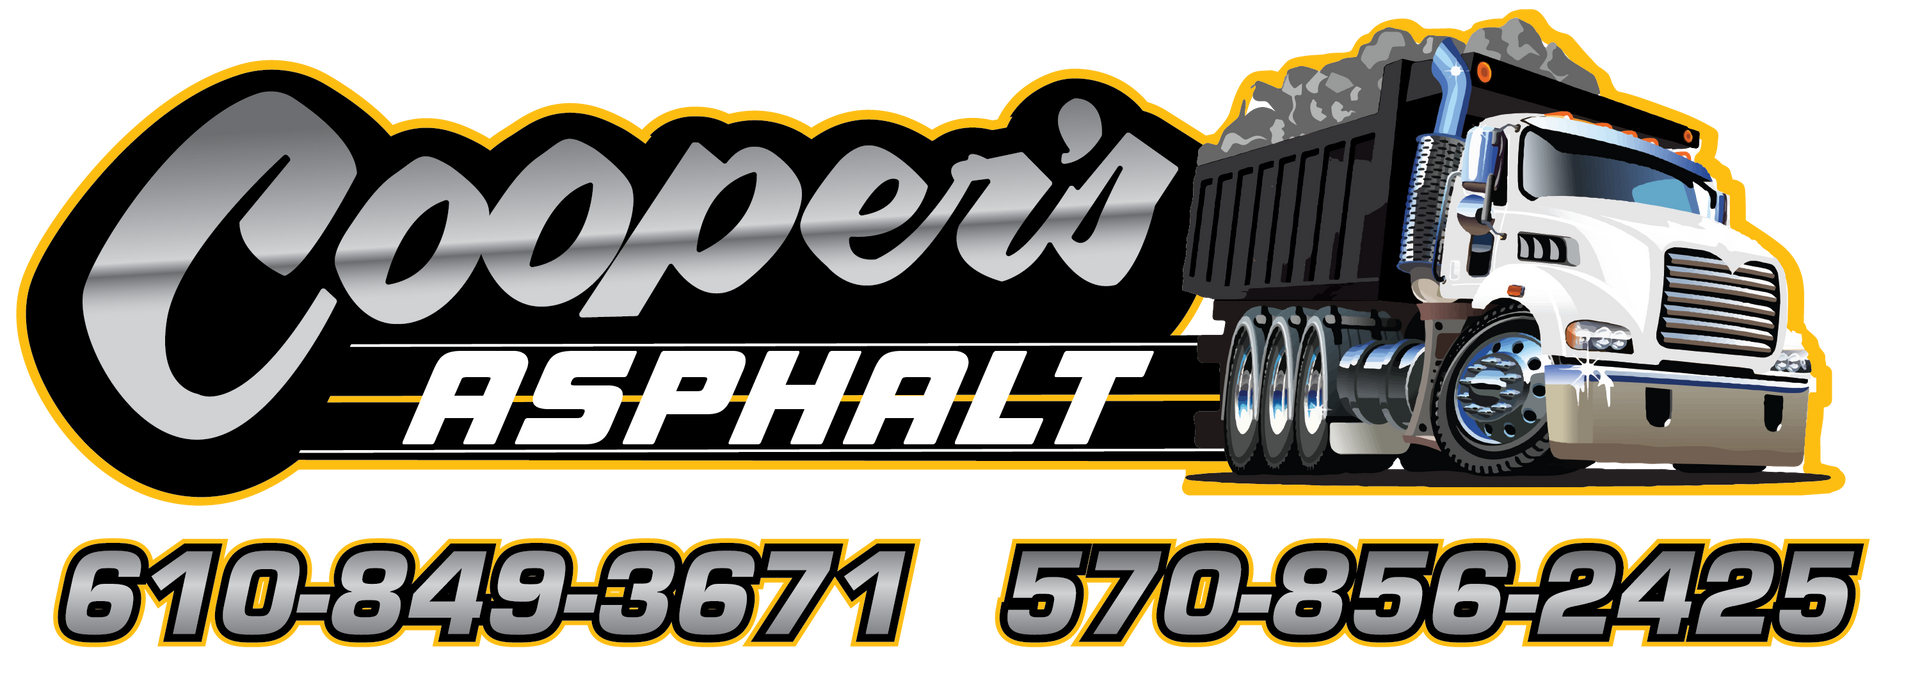 Cooper Asphalt LLC - Logo